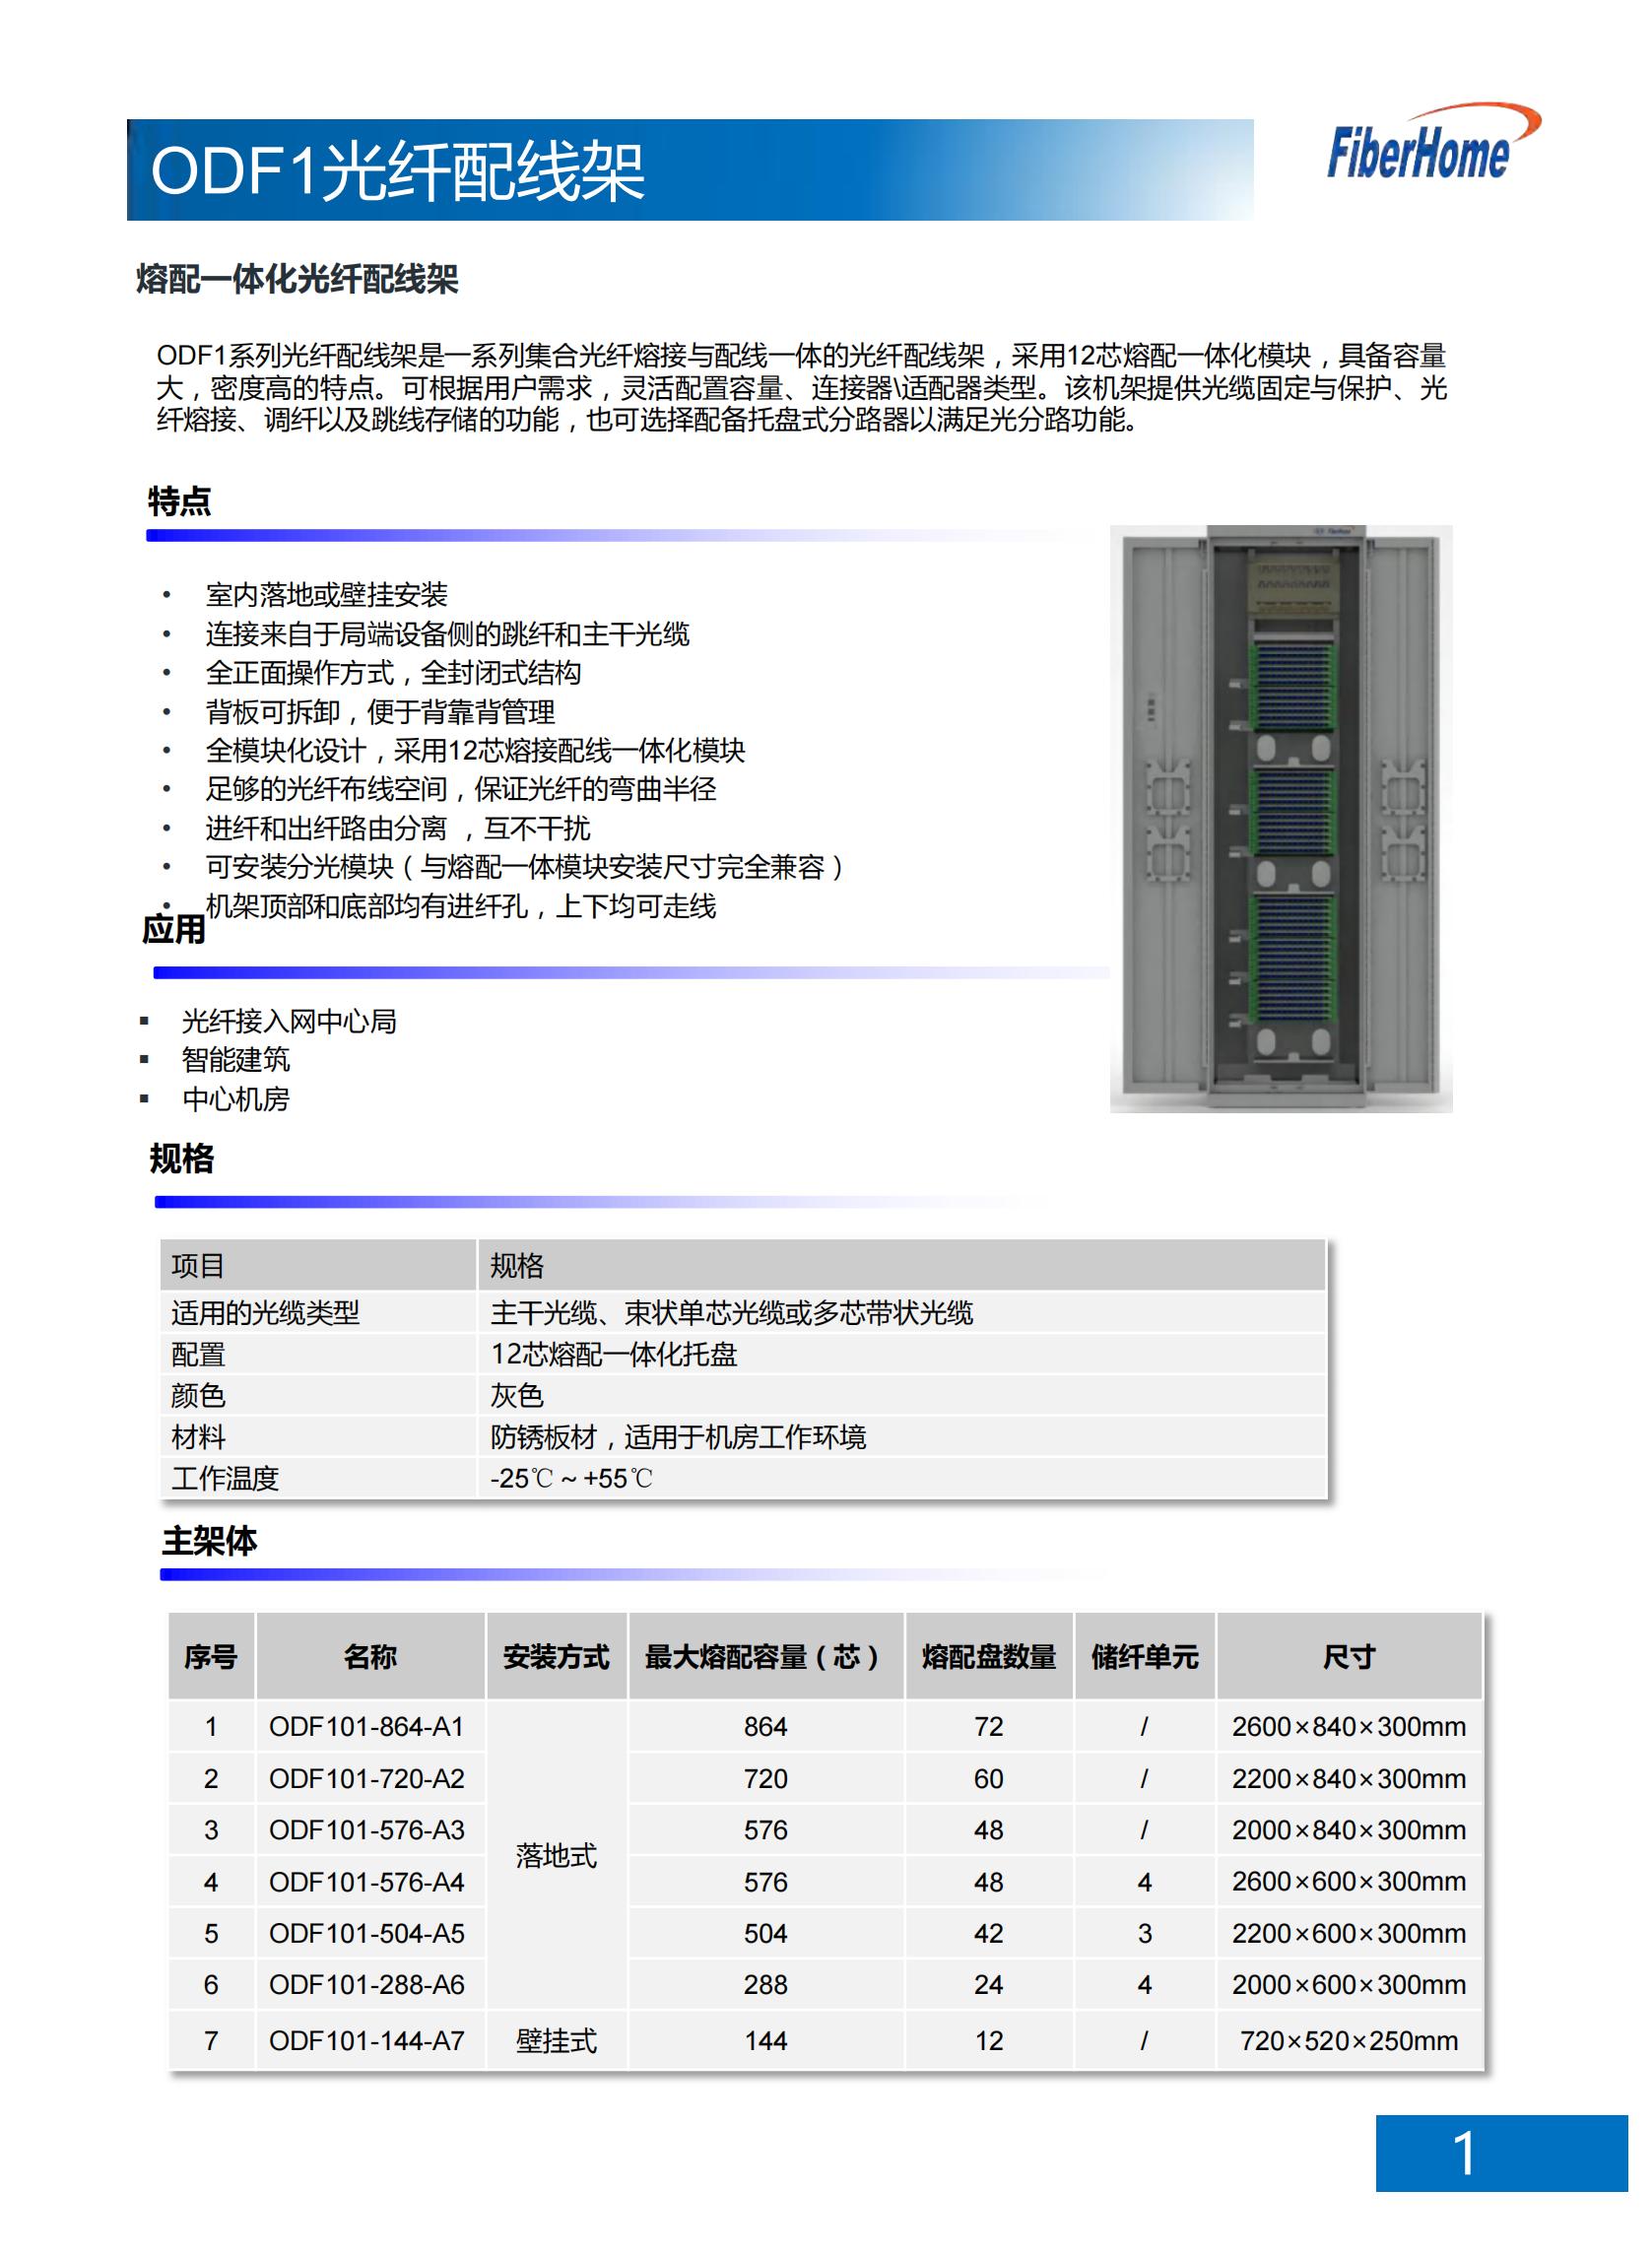 ODF101-1152-A3-LC ODF光纤配线架 （576芯落地式 无子框型 全部含24芯LC熔配一体化单元）